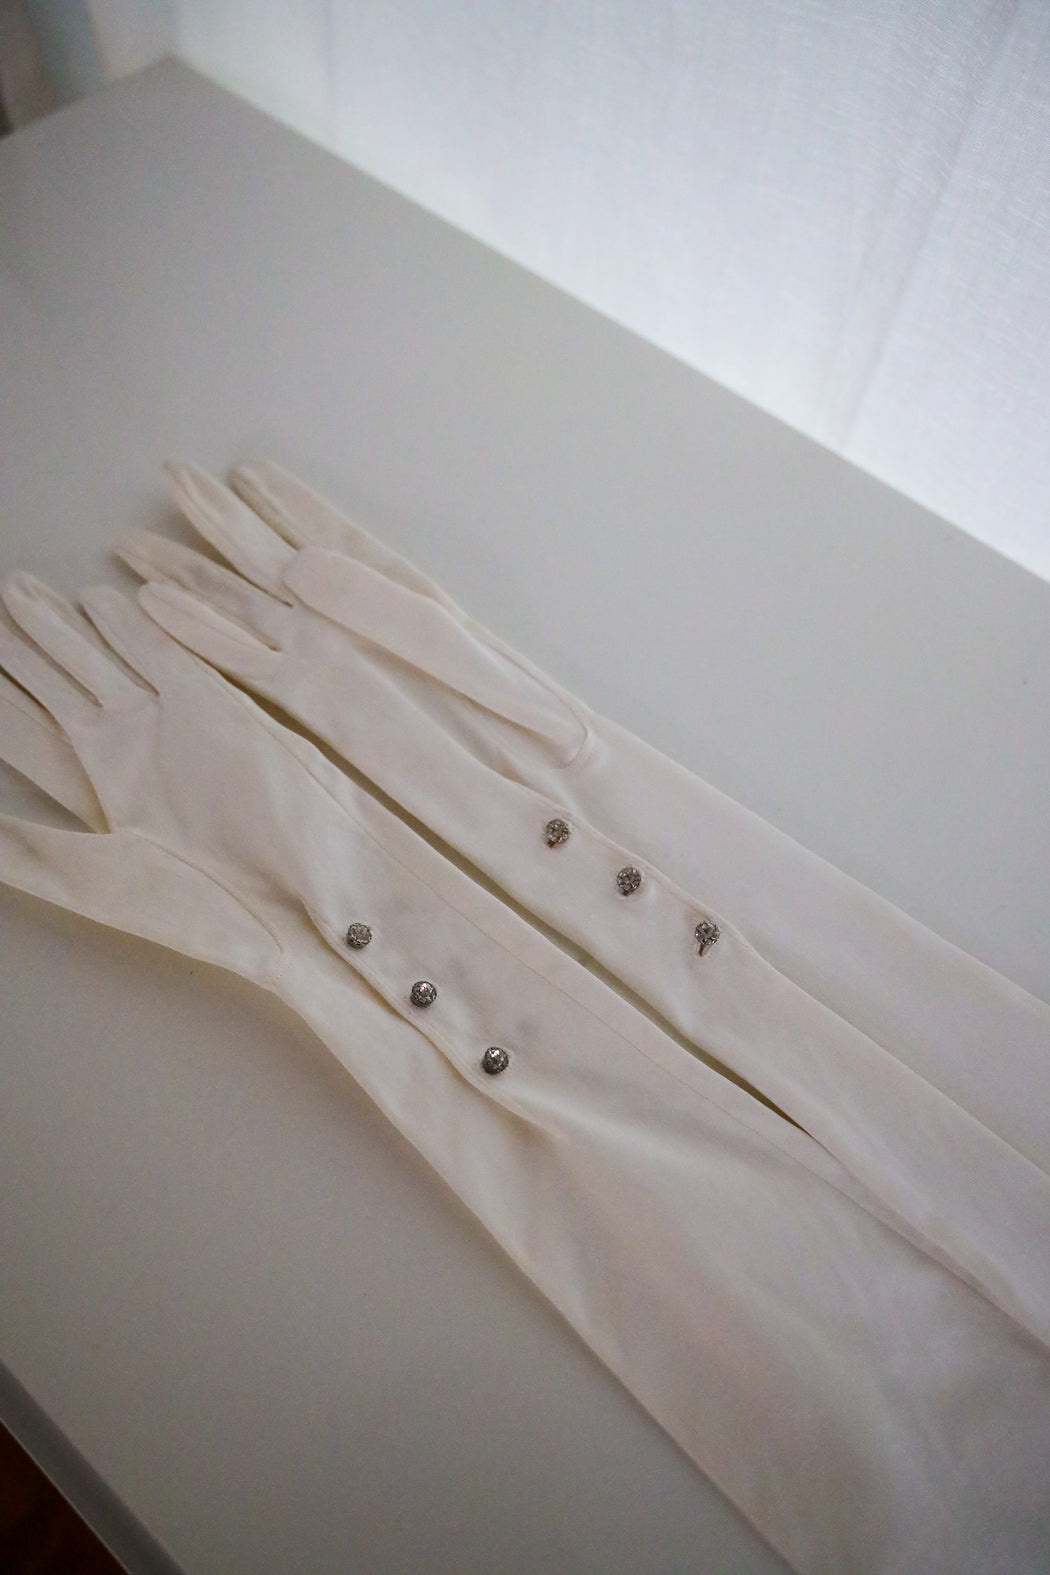 Vintage White Opera Length Gloves with Rhinestone Details